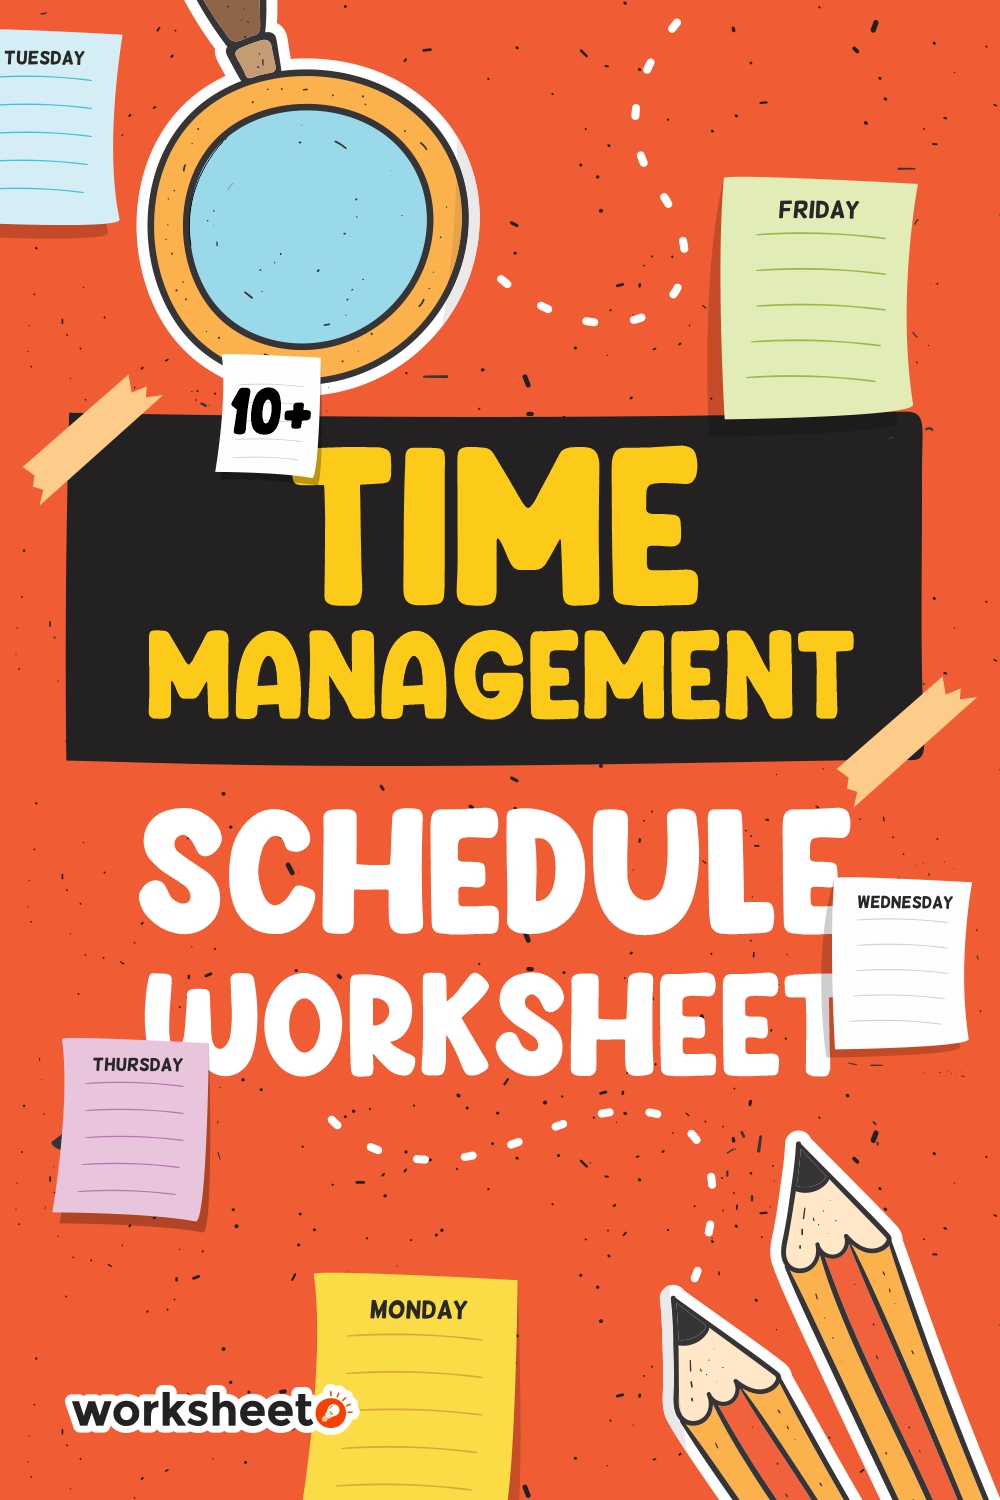 Time Management Schedule Worksheets